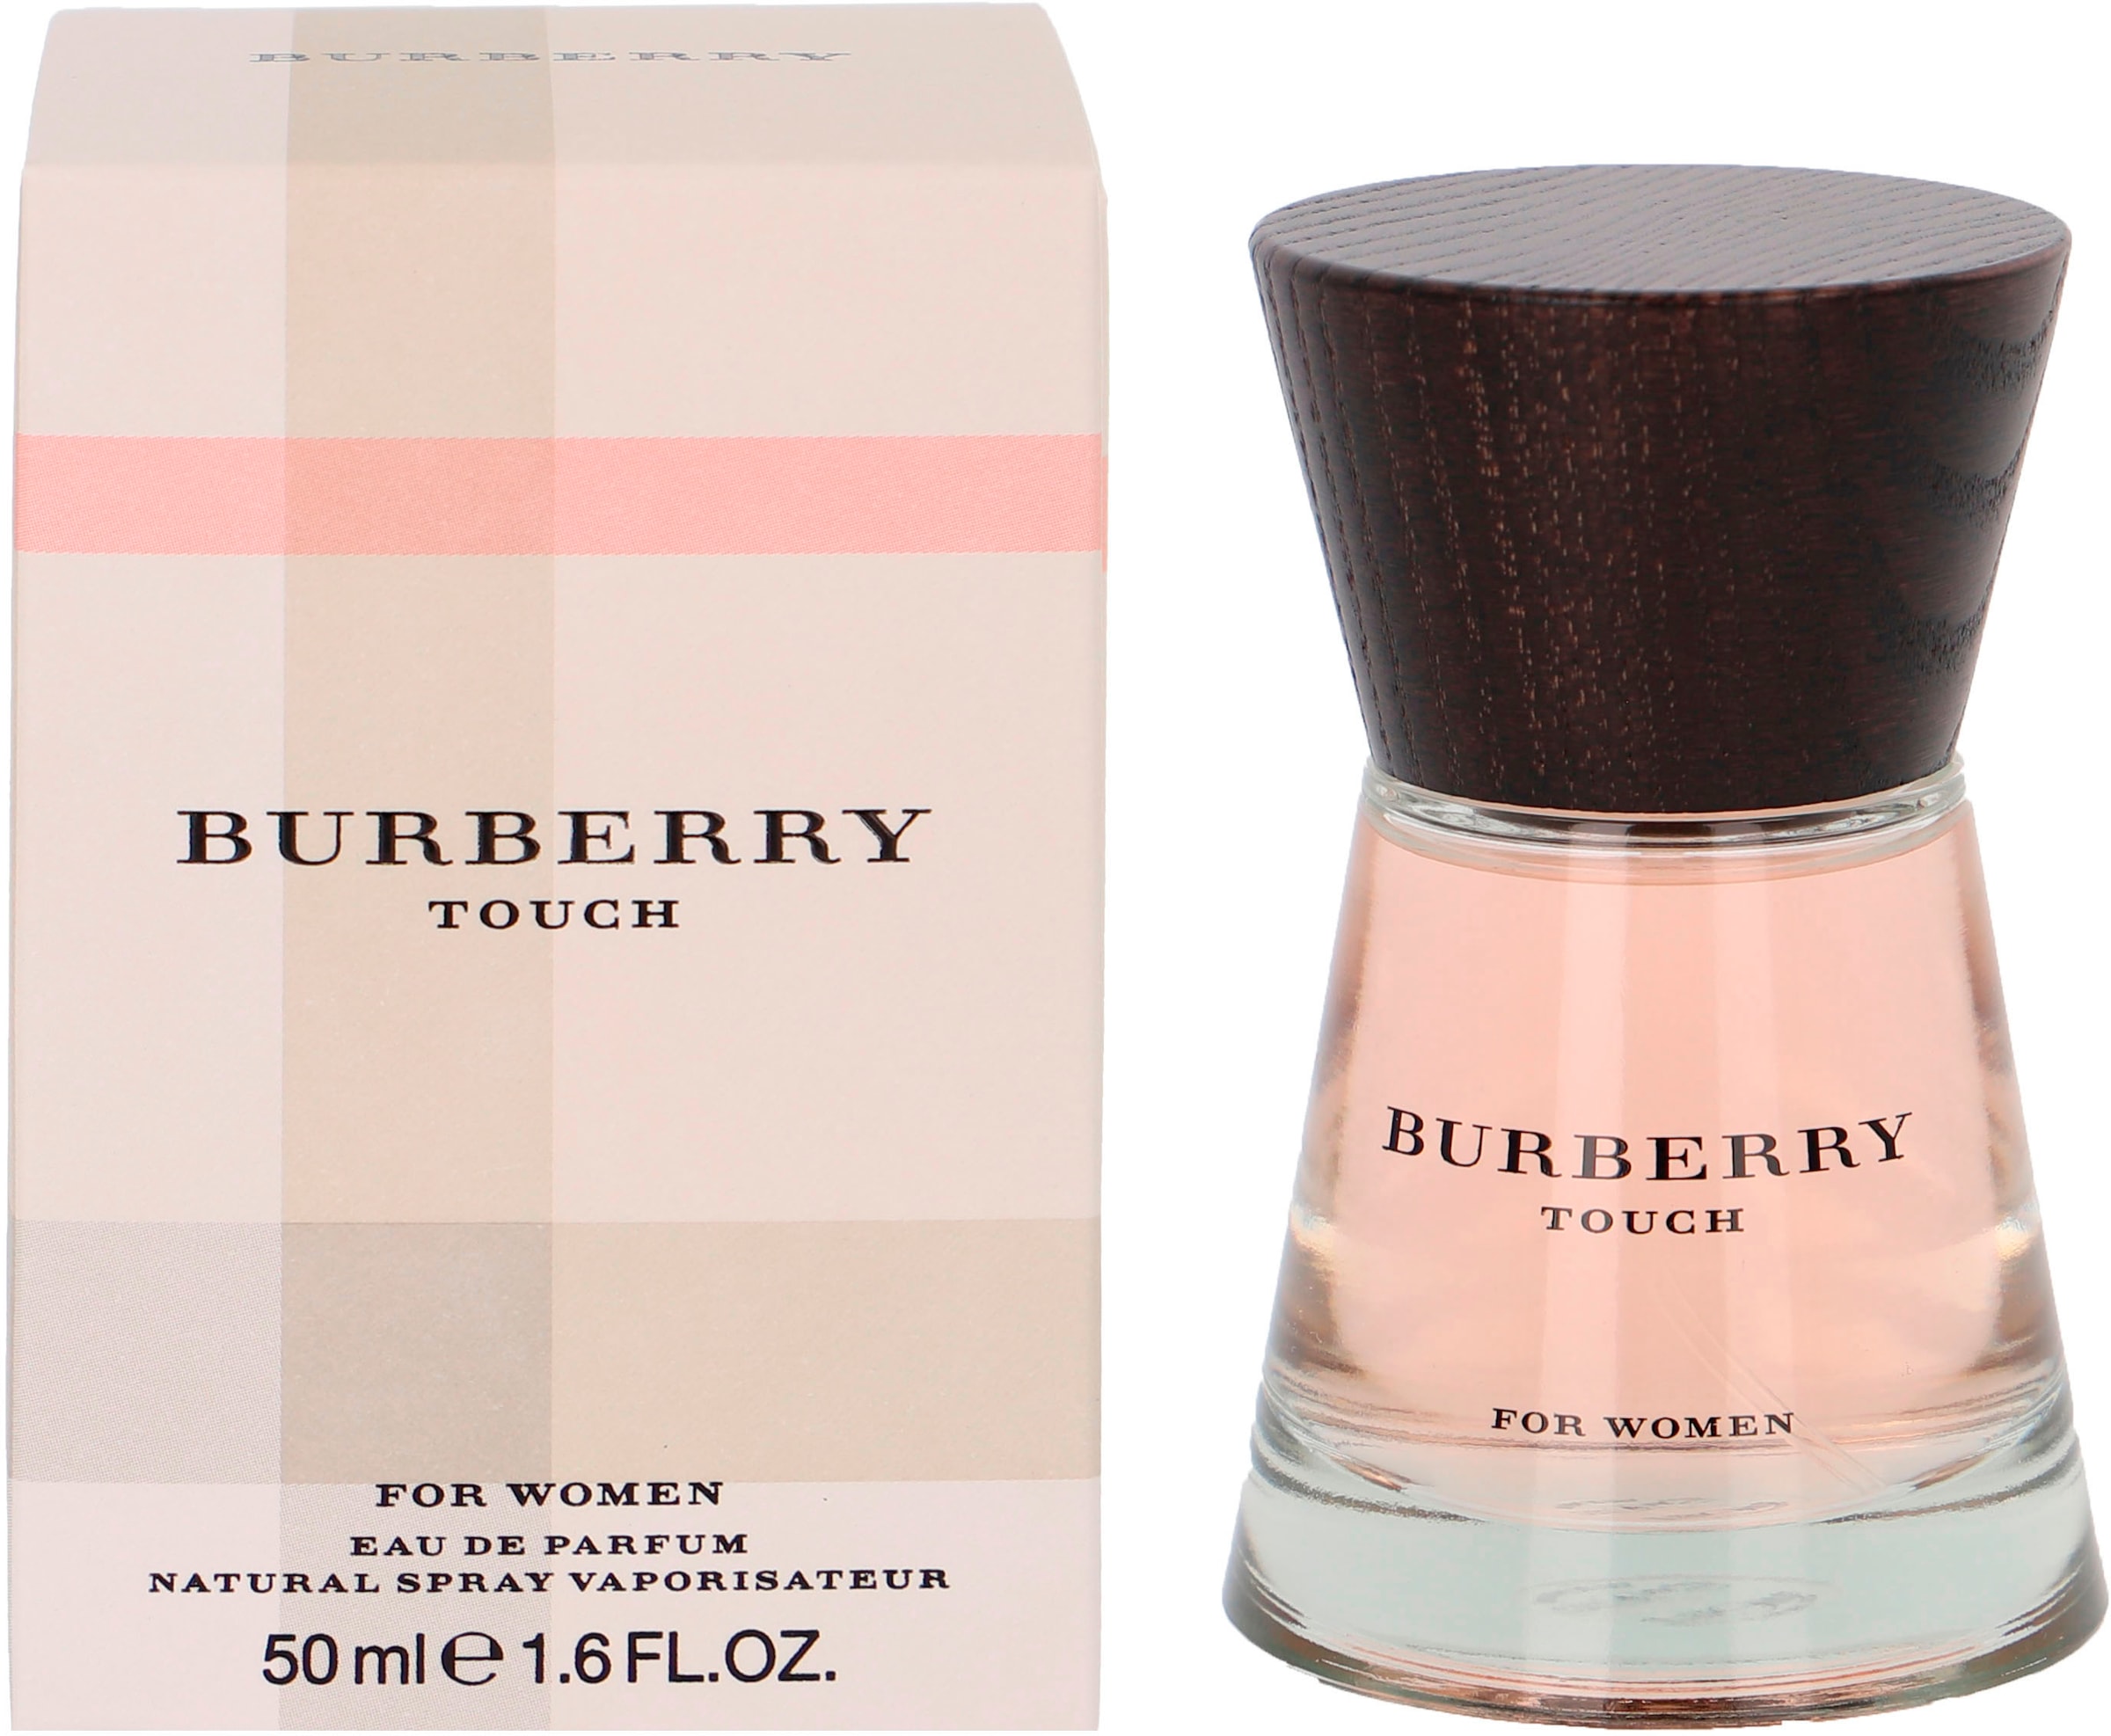 Burberry online per Ratenkauf >> Parfum & Düfte